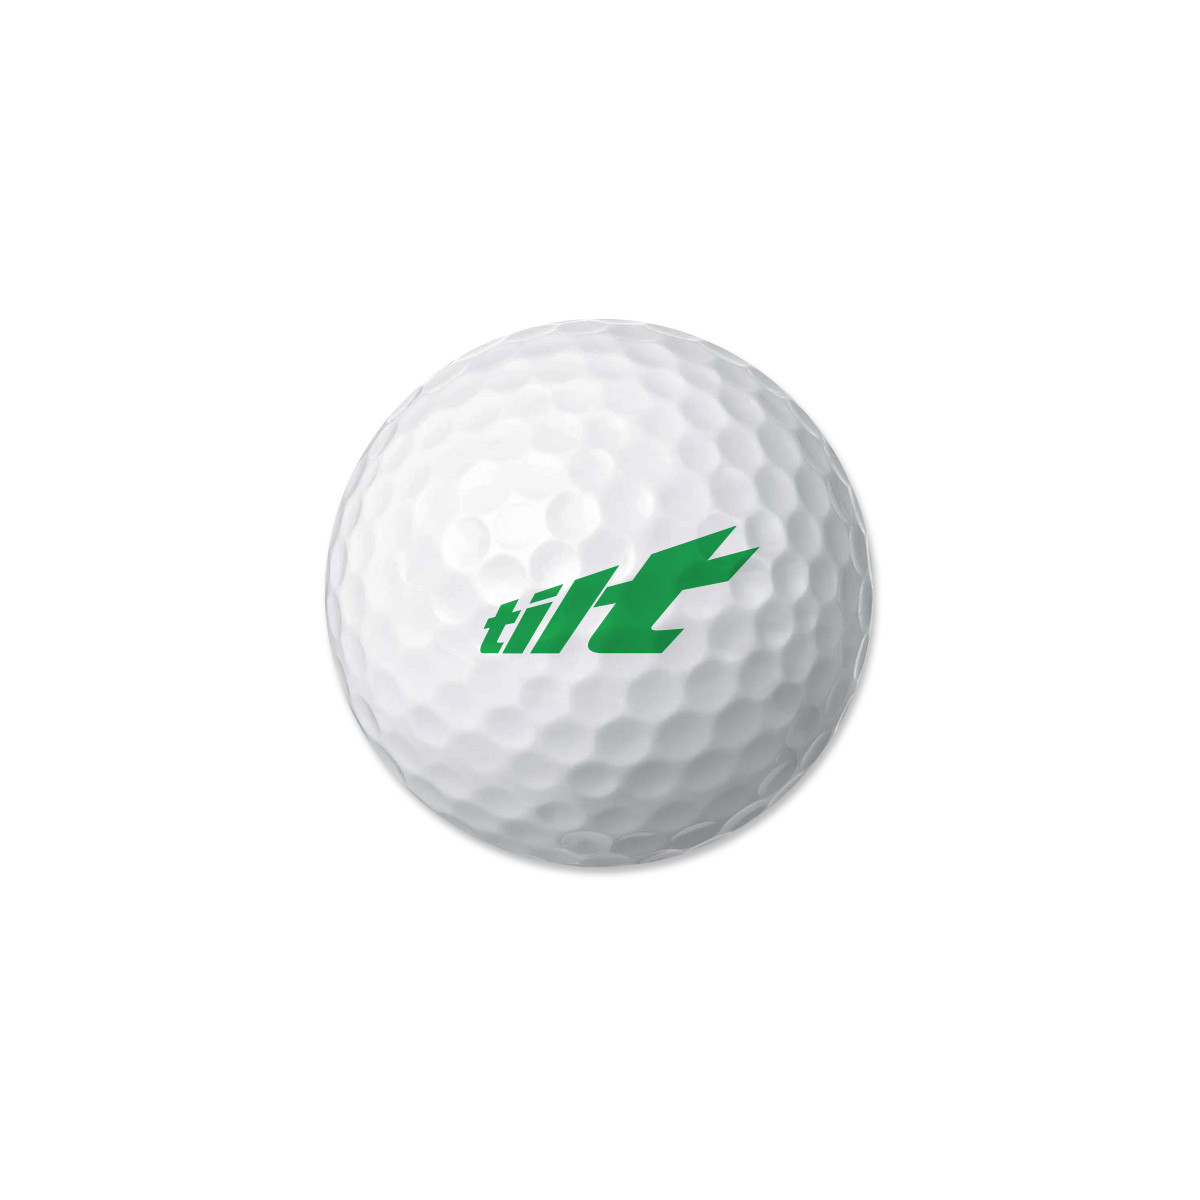 Confidence Man - TILT Golf Ball + Digital Download 